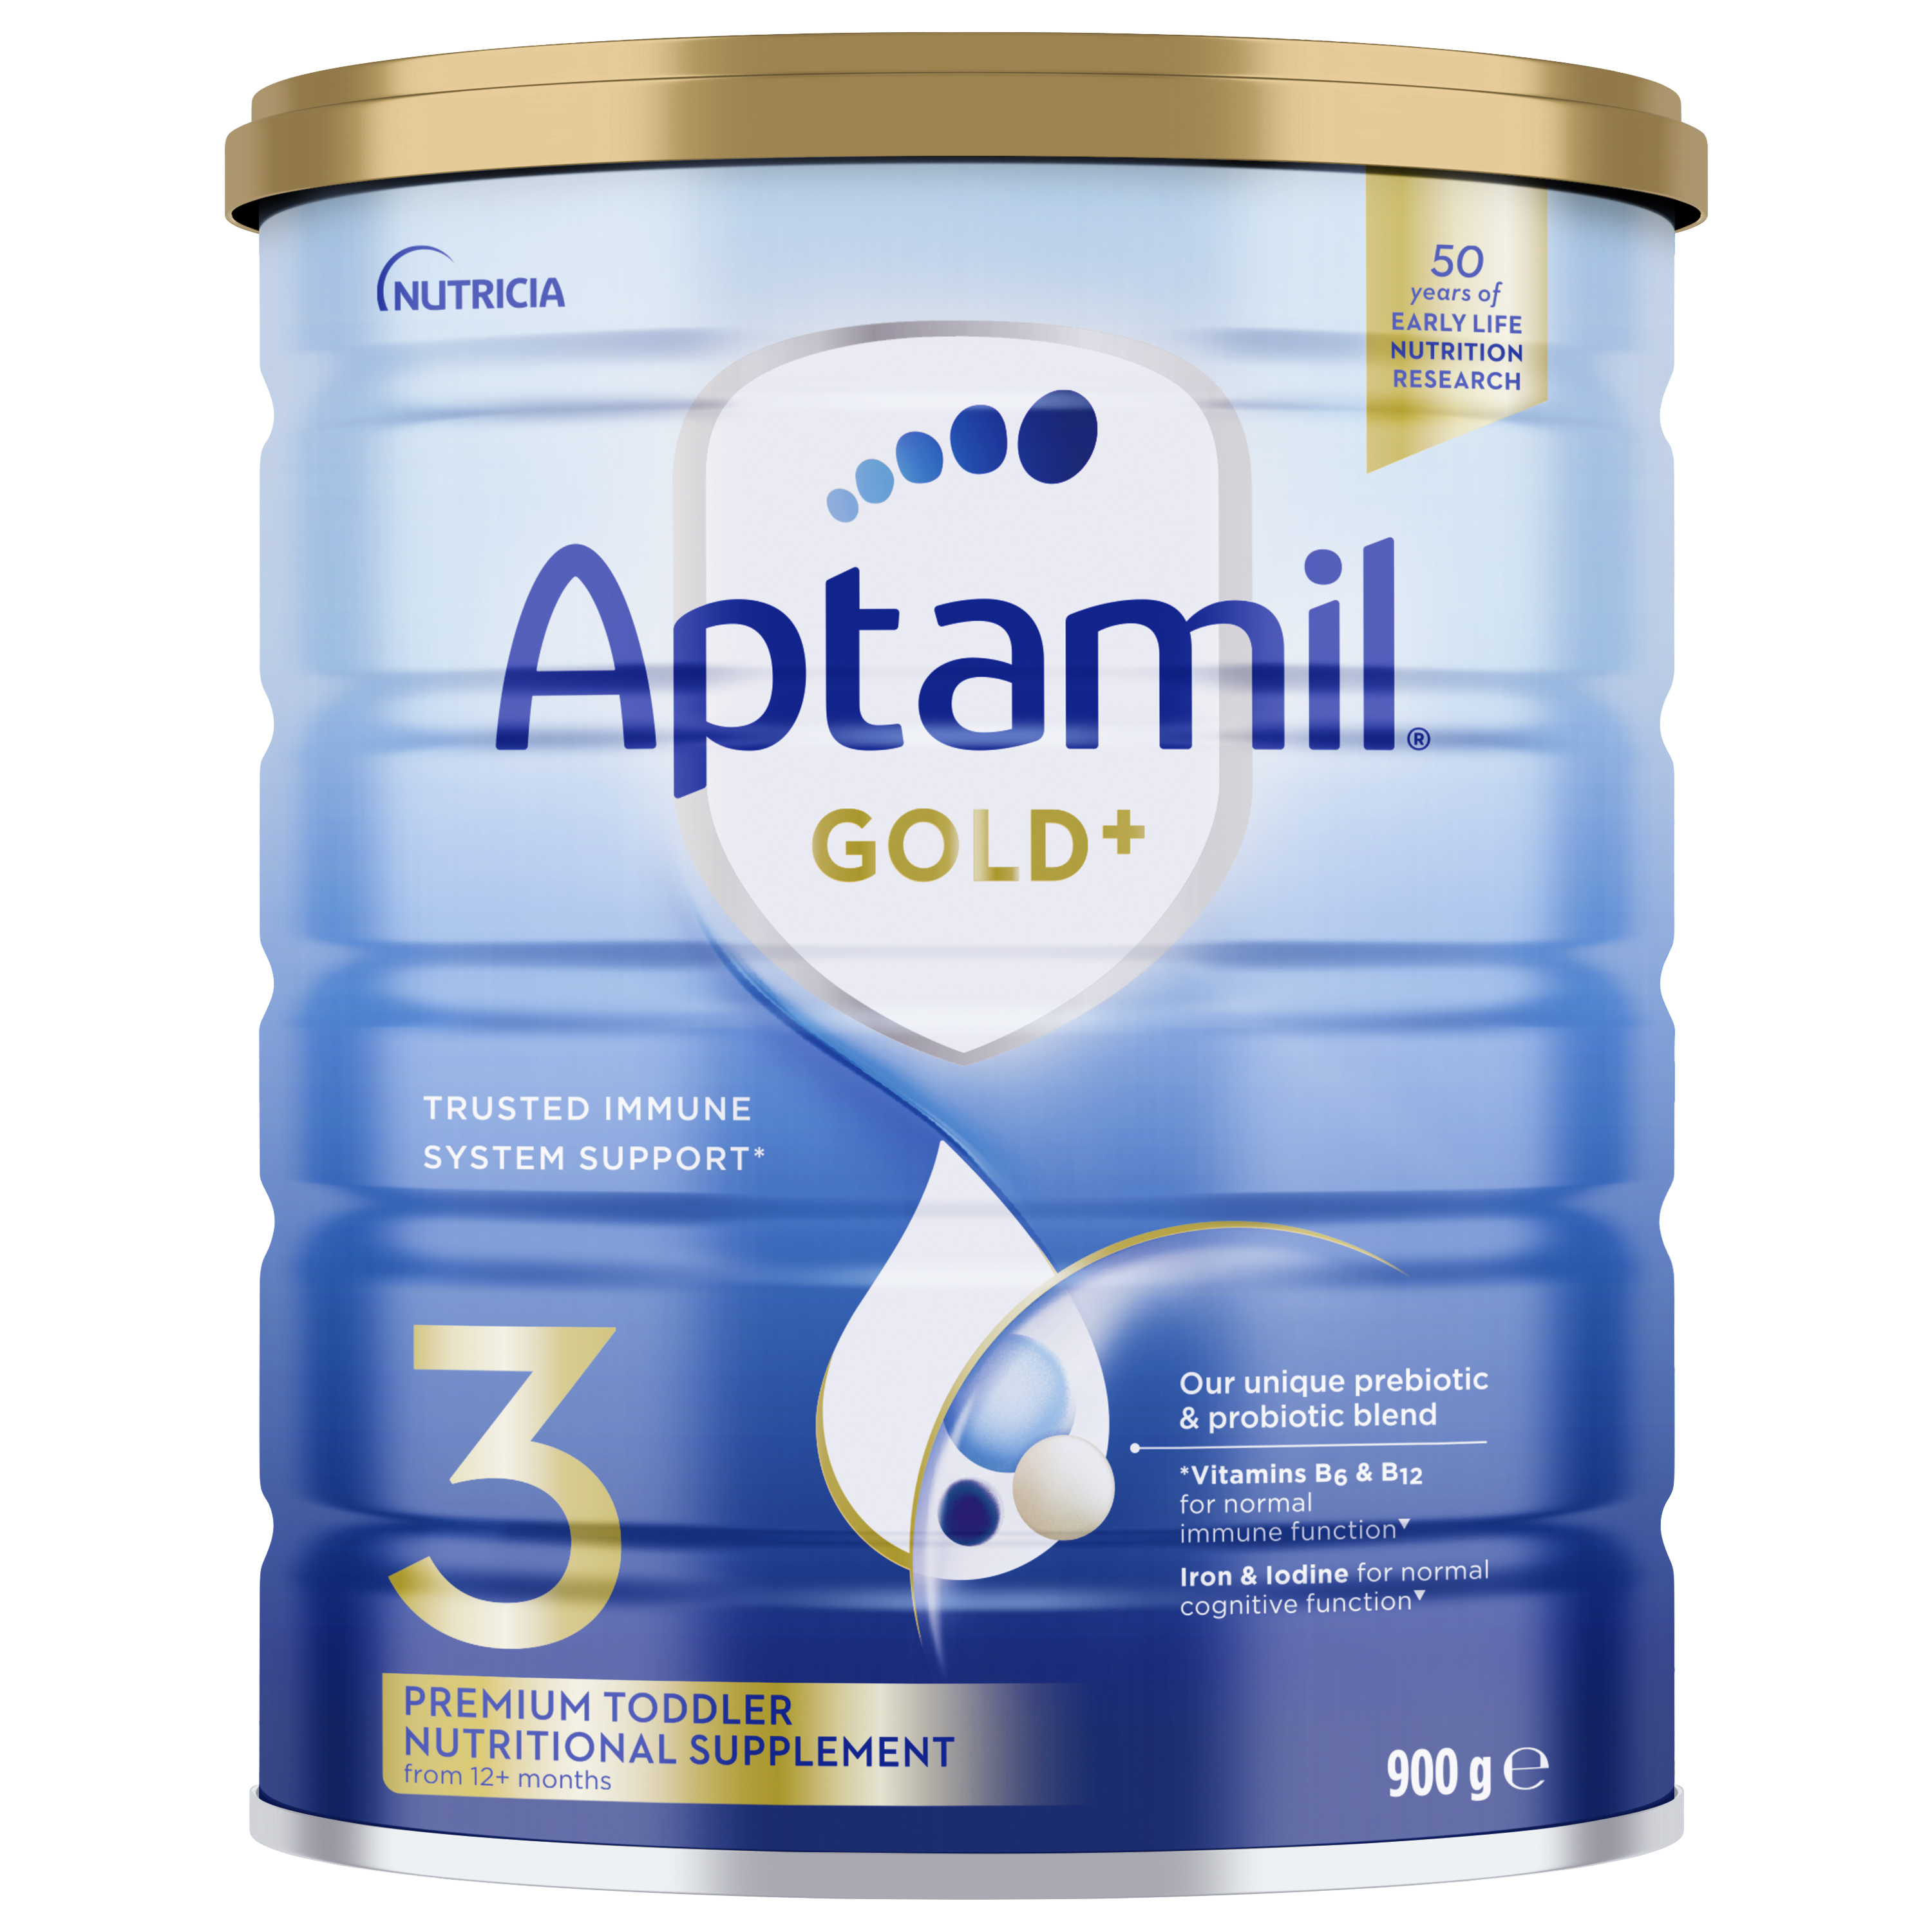 NK3 [新包装]Aptamil Gold+ 爱他美金装版婴儿奶粉 3段 1岁-2岁900g